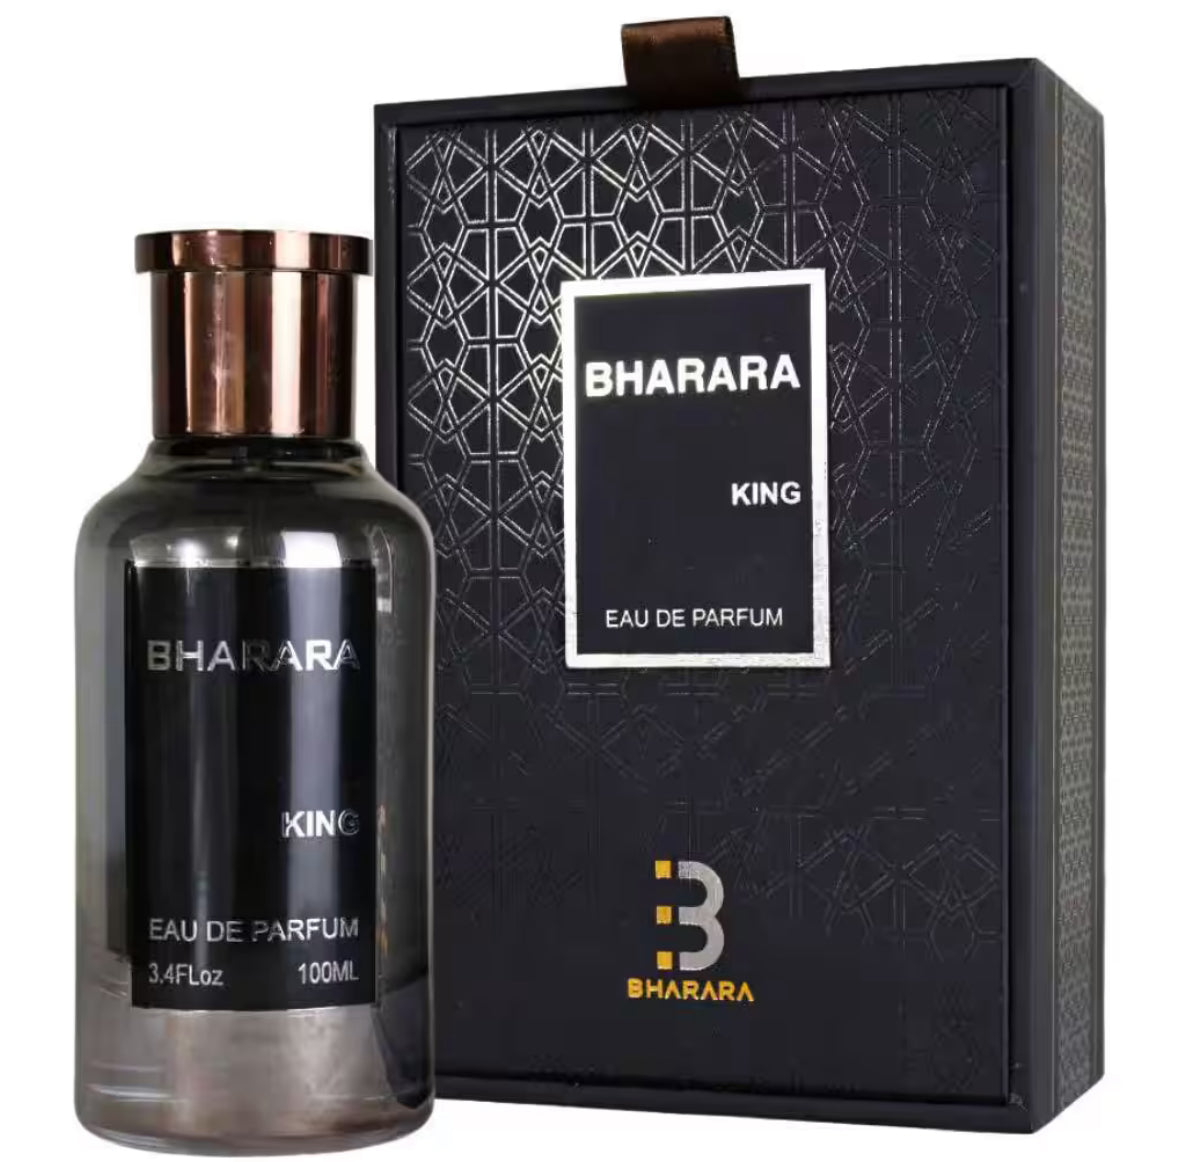 Bharara King Eau de Parfum